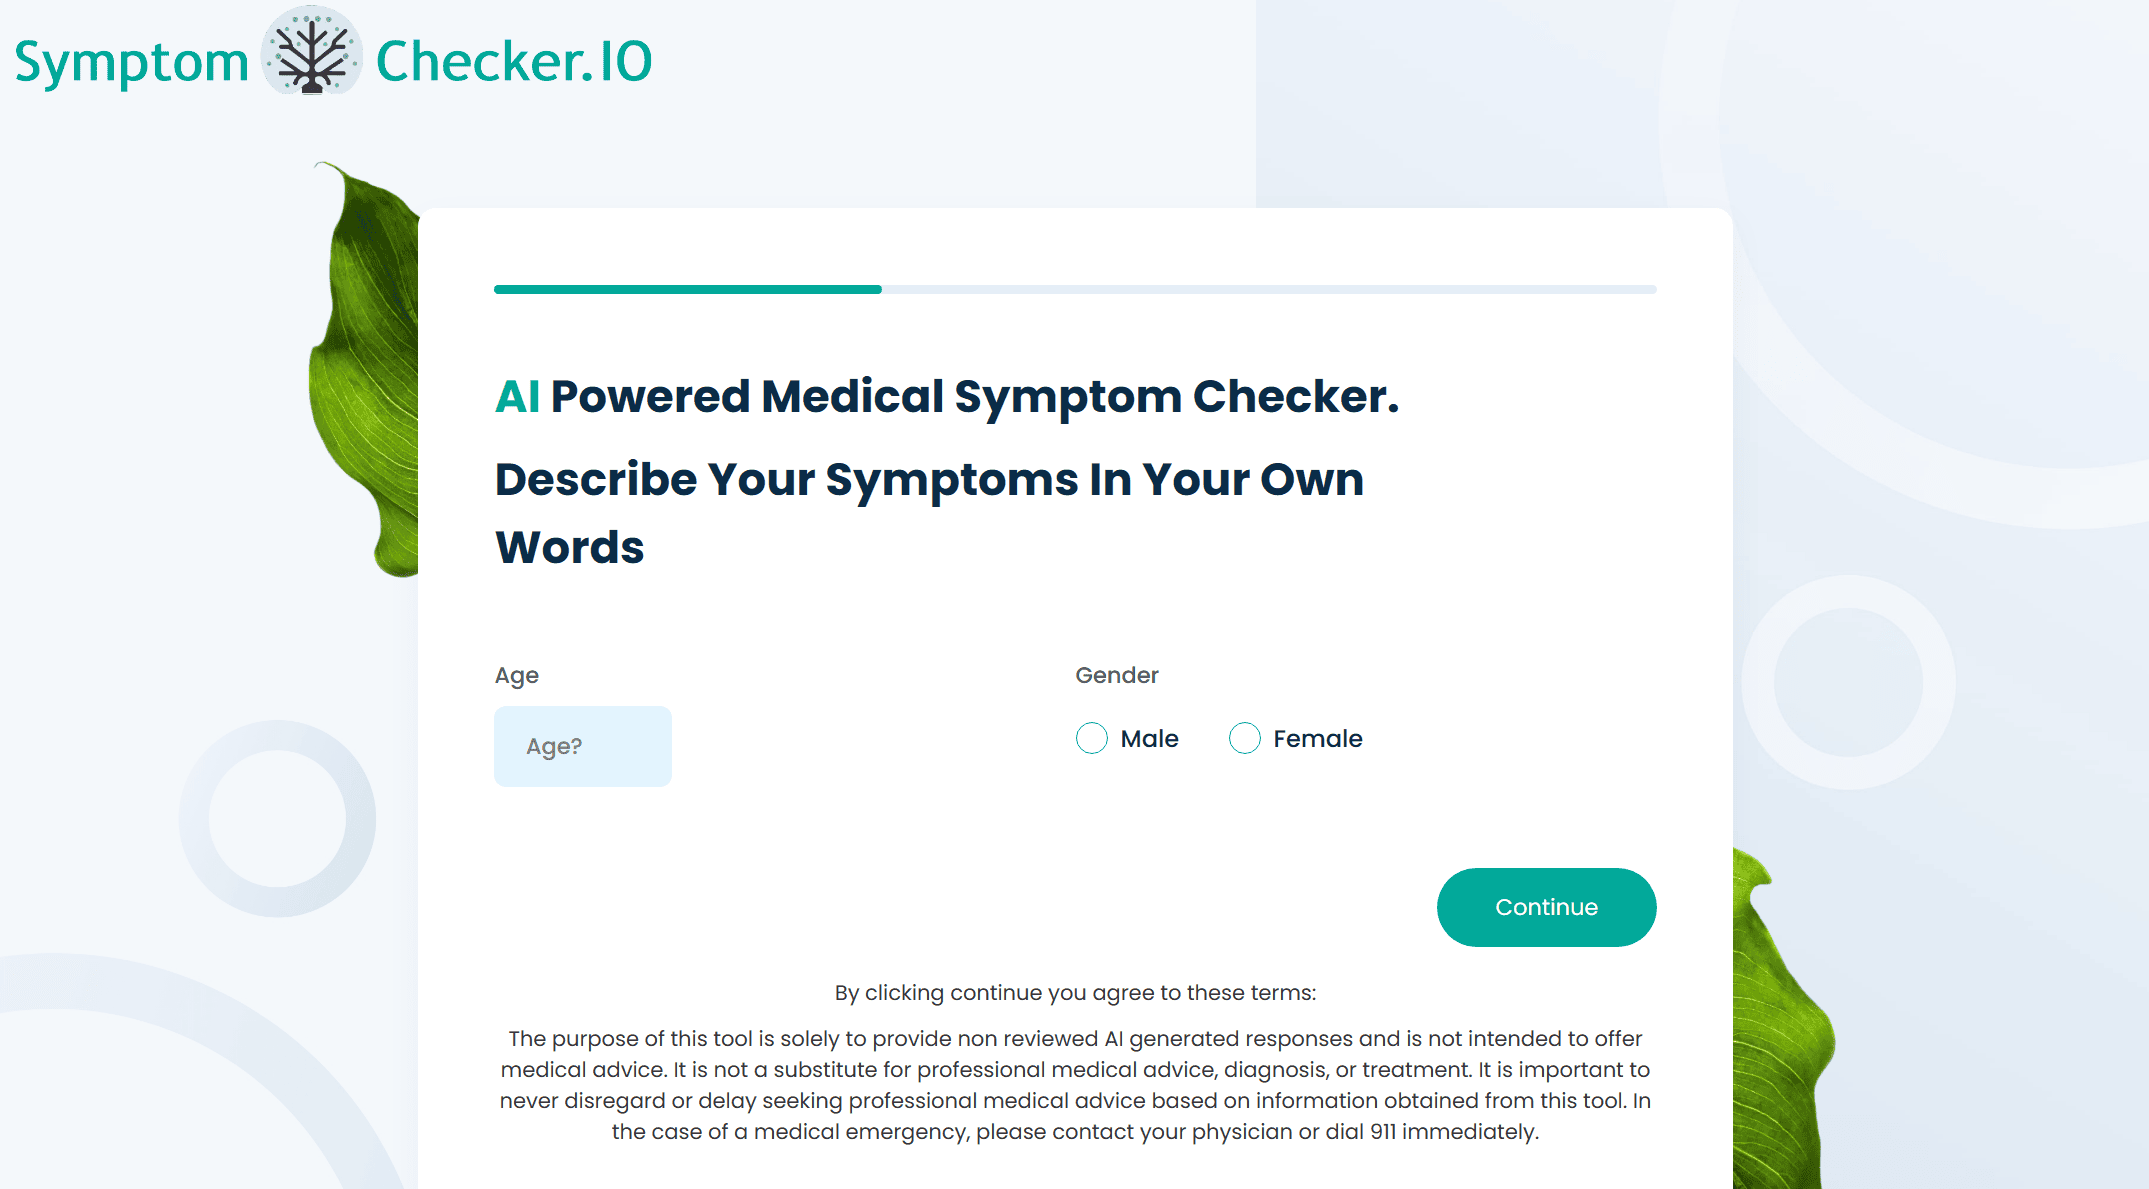 SymptomChecker